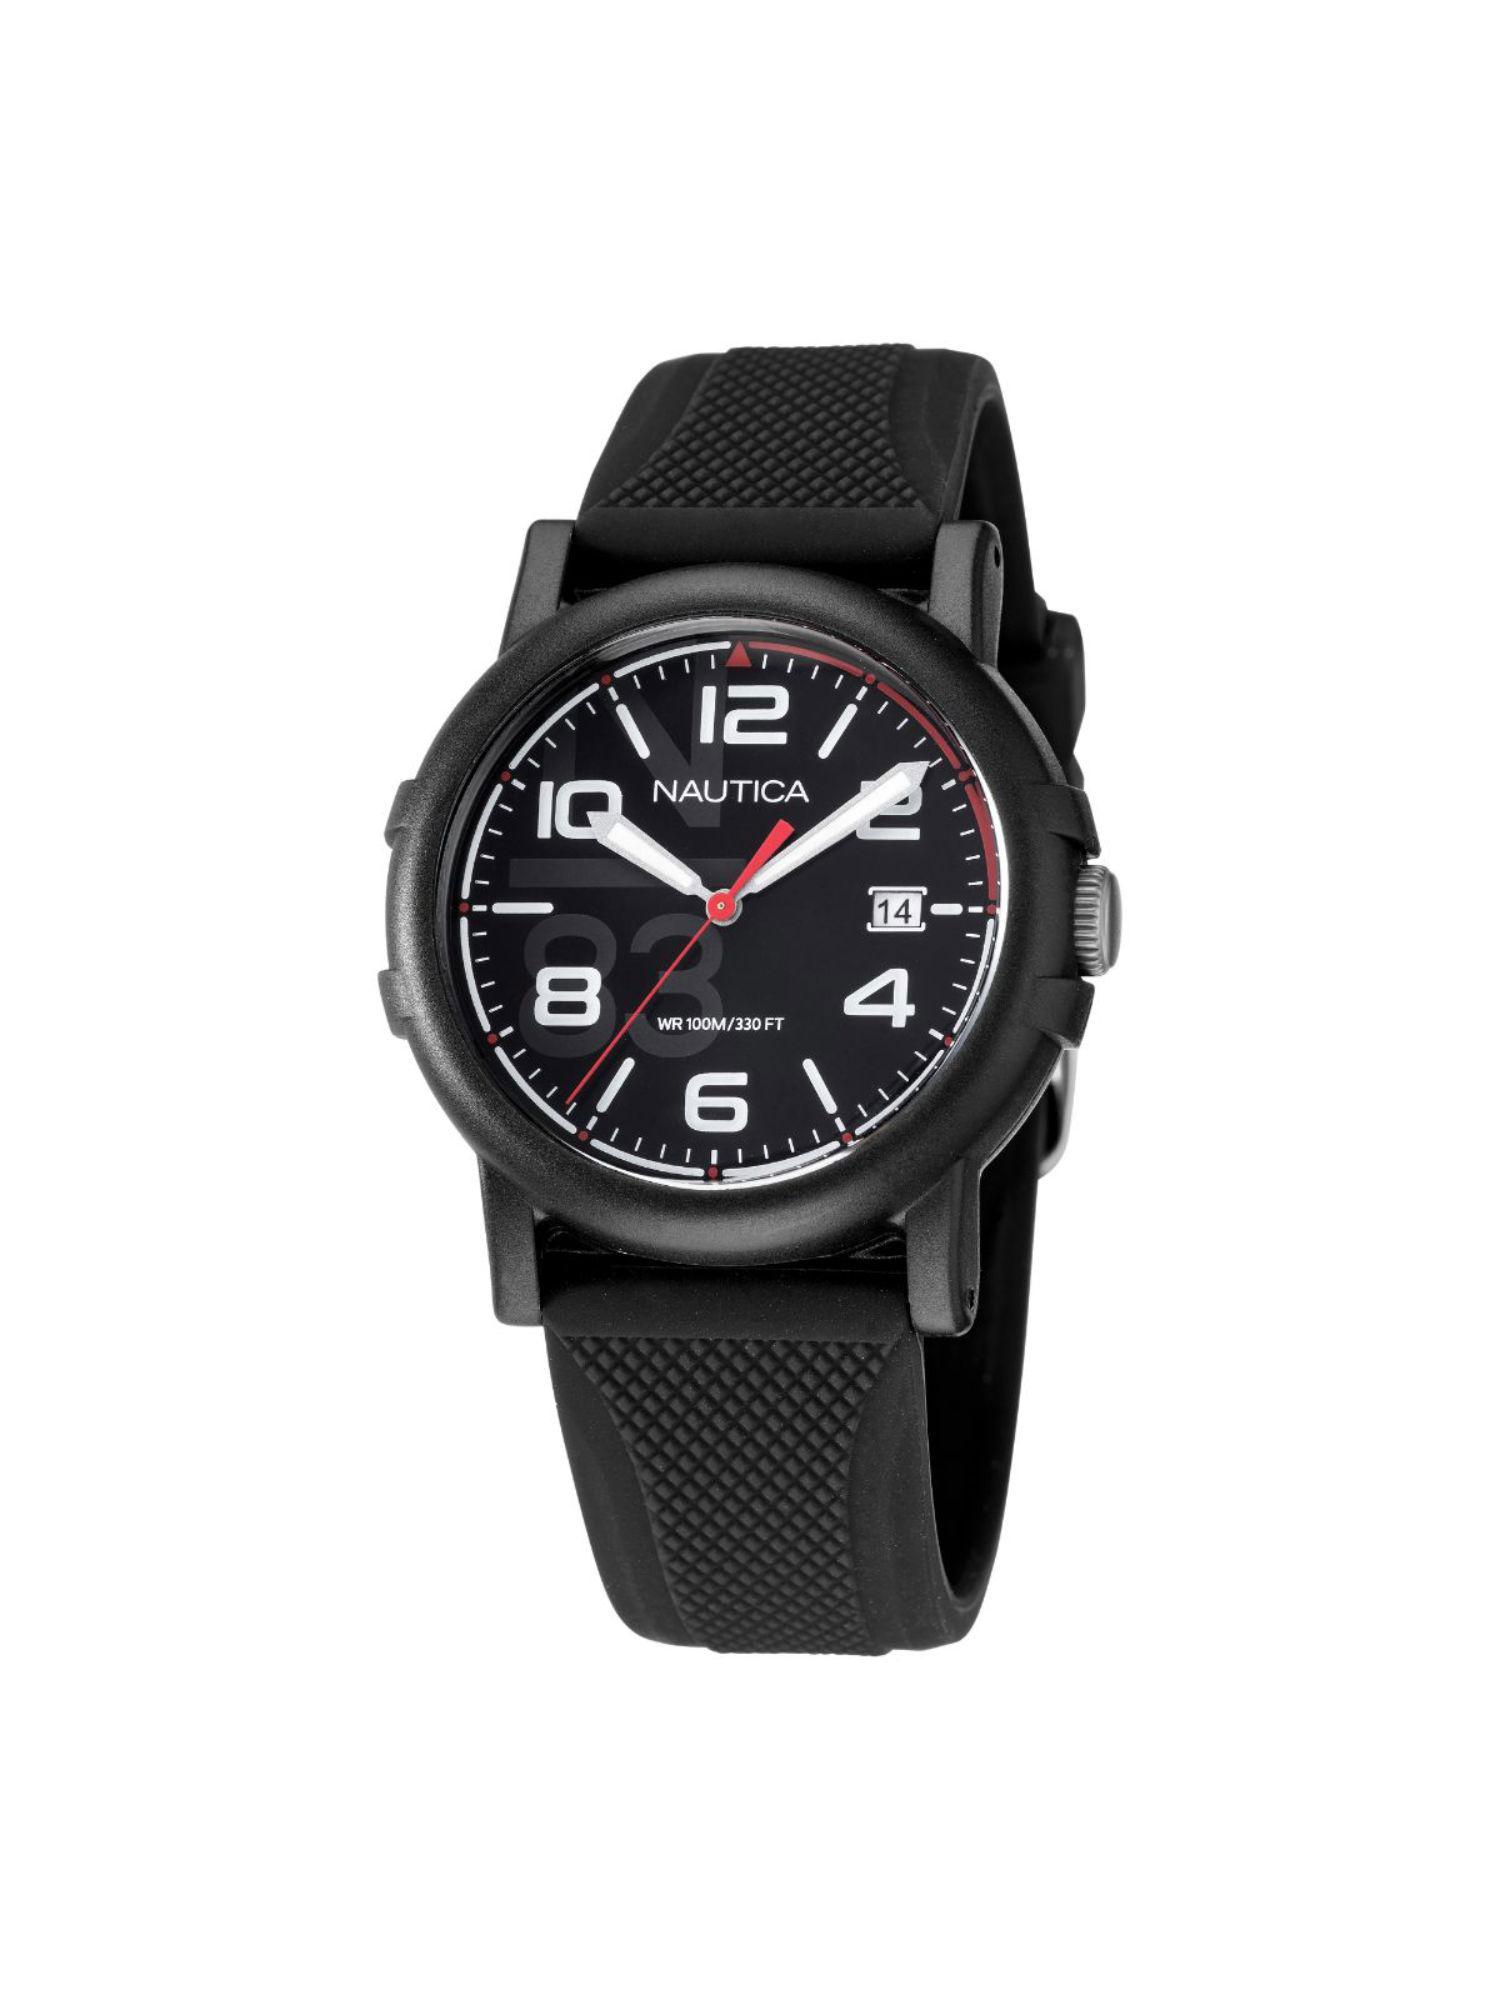 black dial analog mens watch (napepf108)